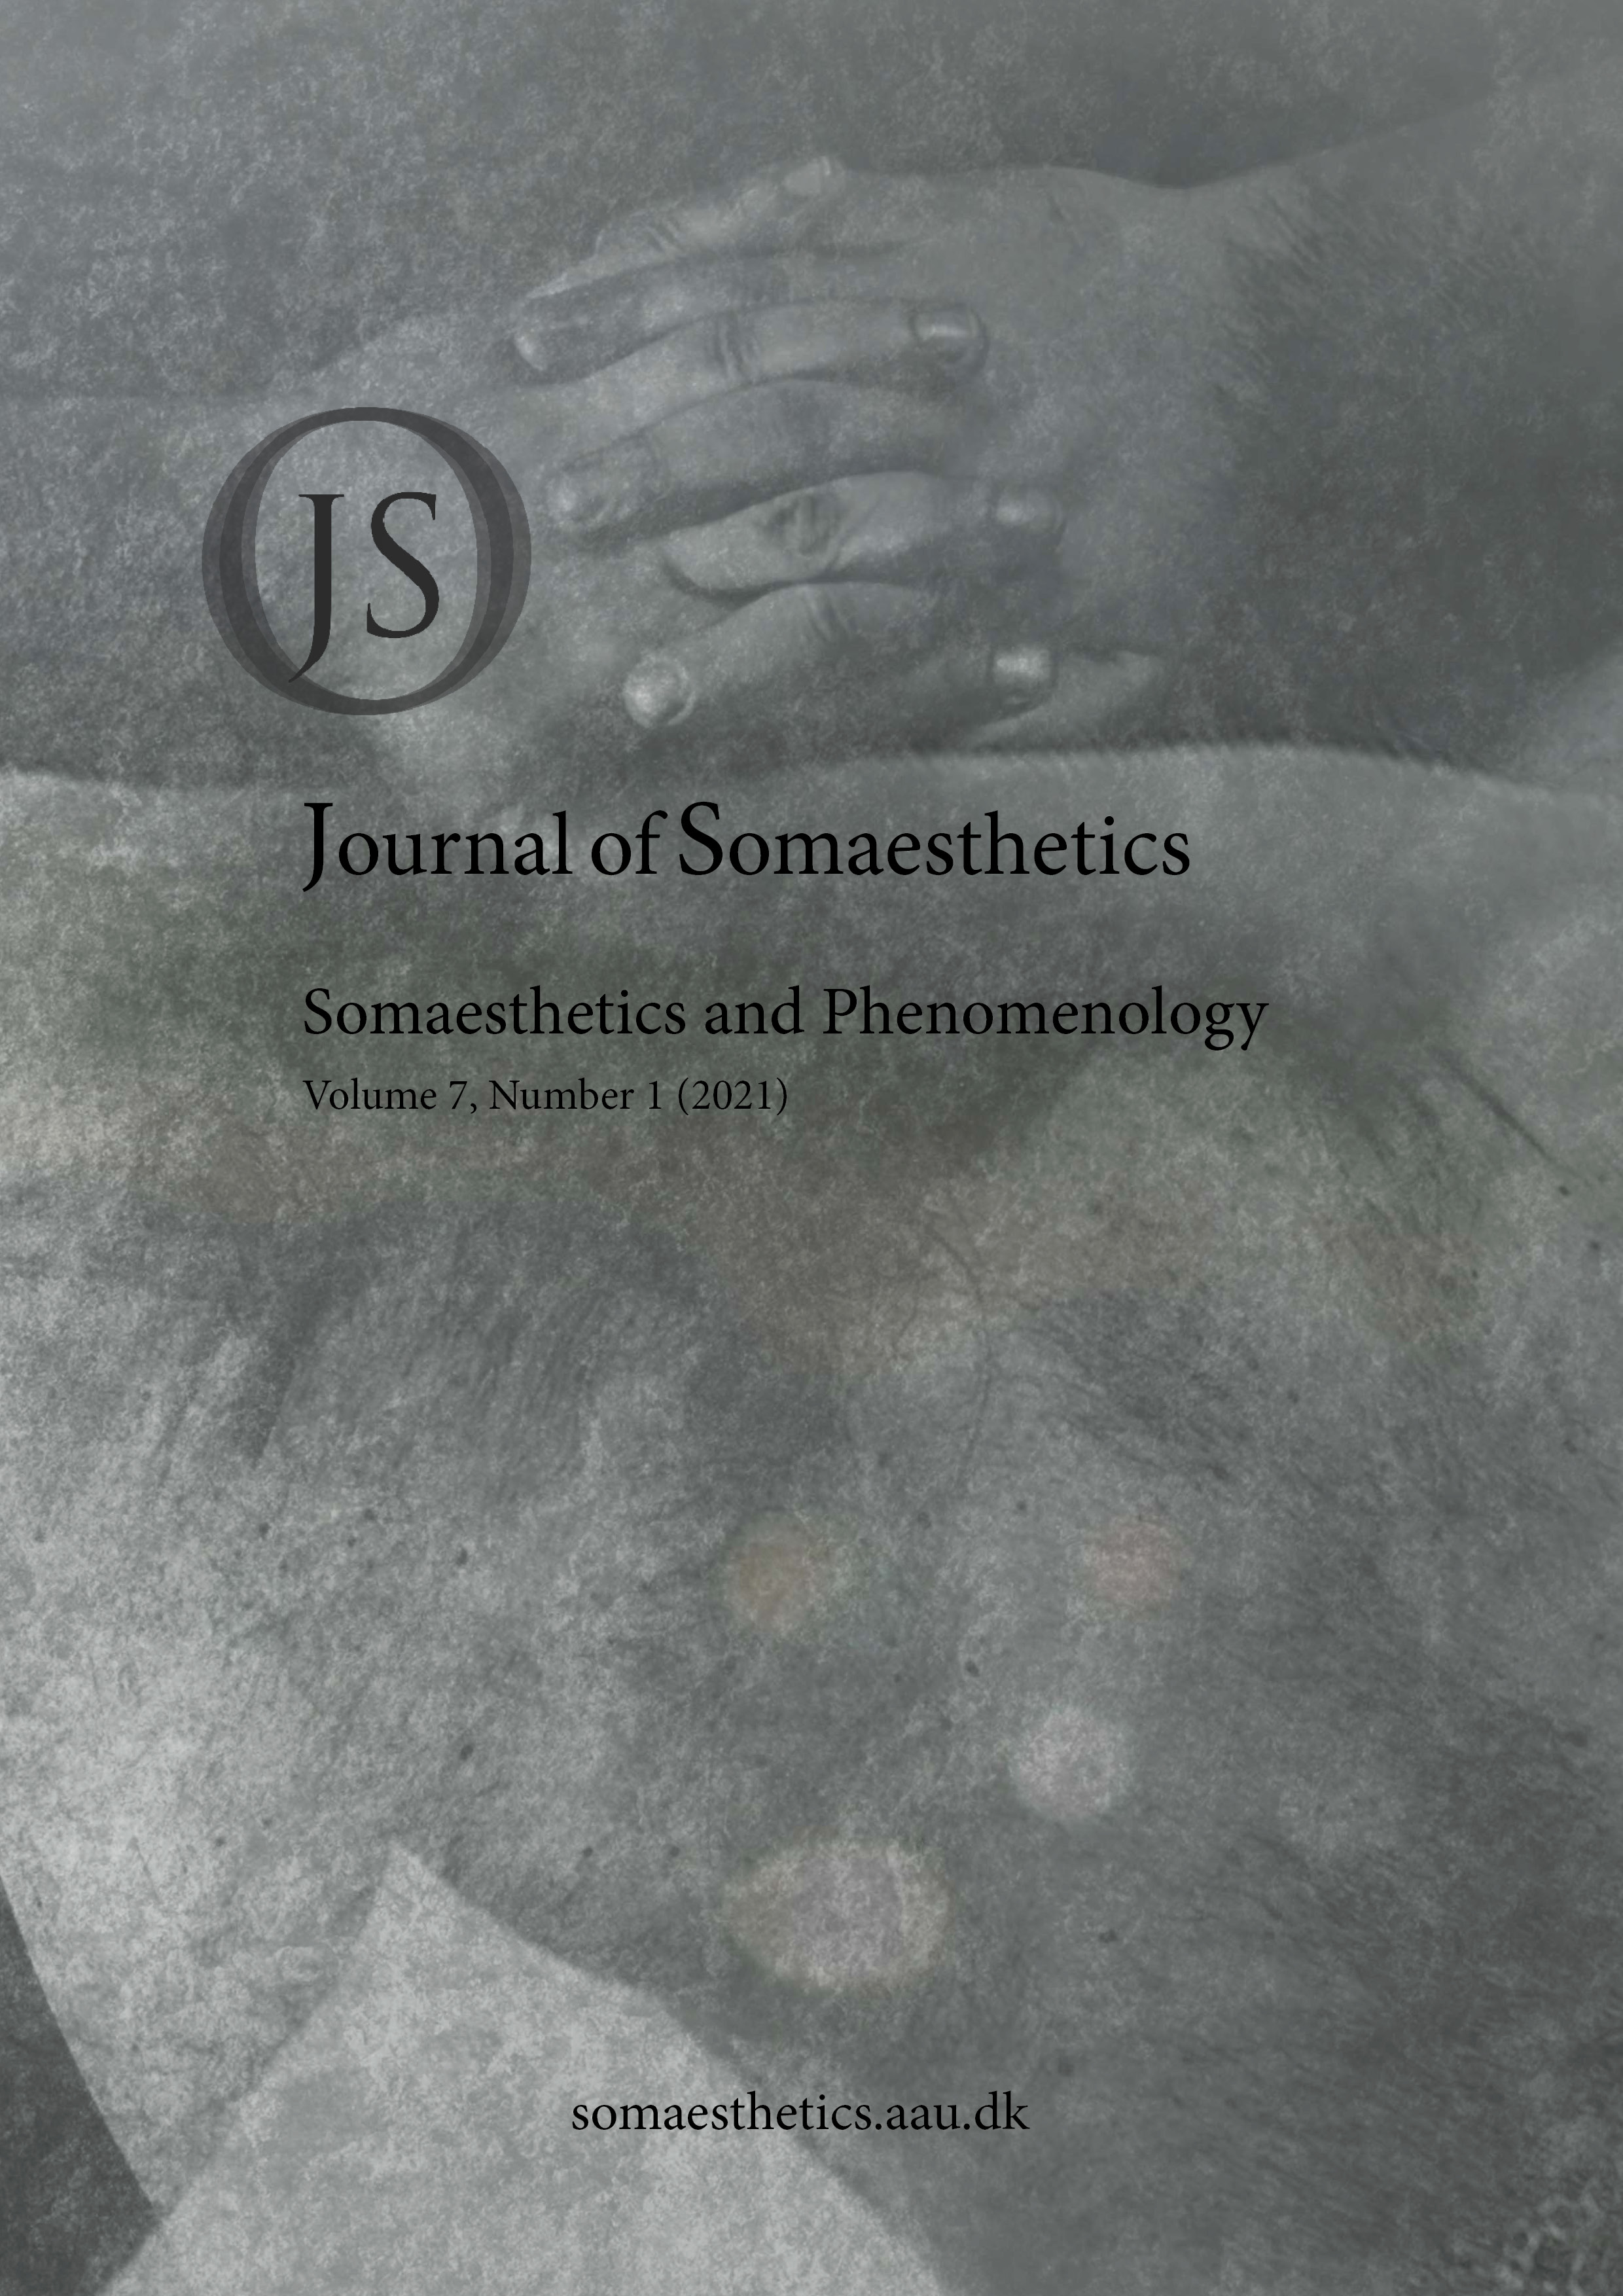 					View Vol. 7 No. 1 (2021): Somaesthetics and Phenomenology
				